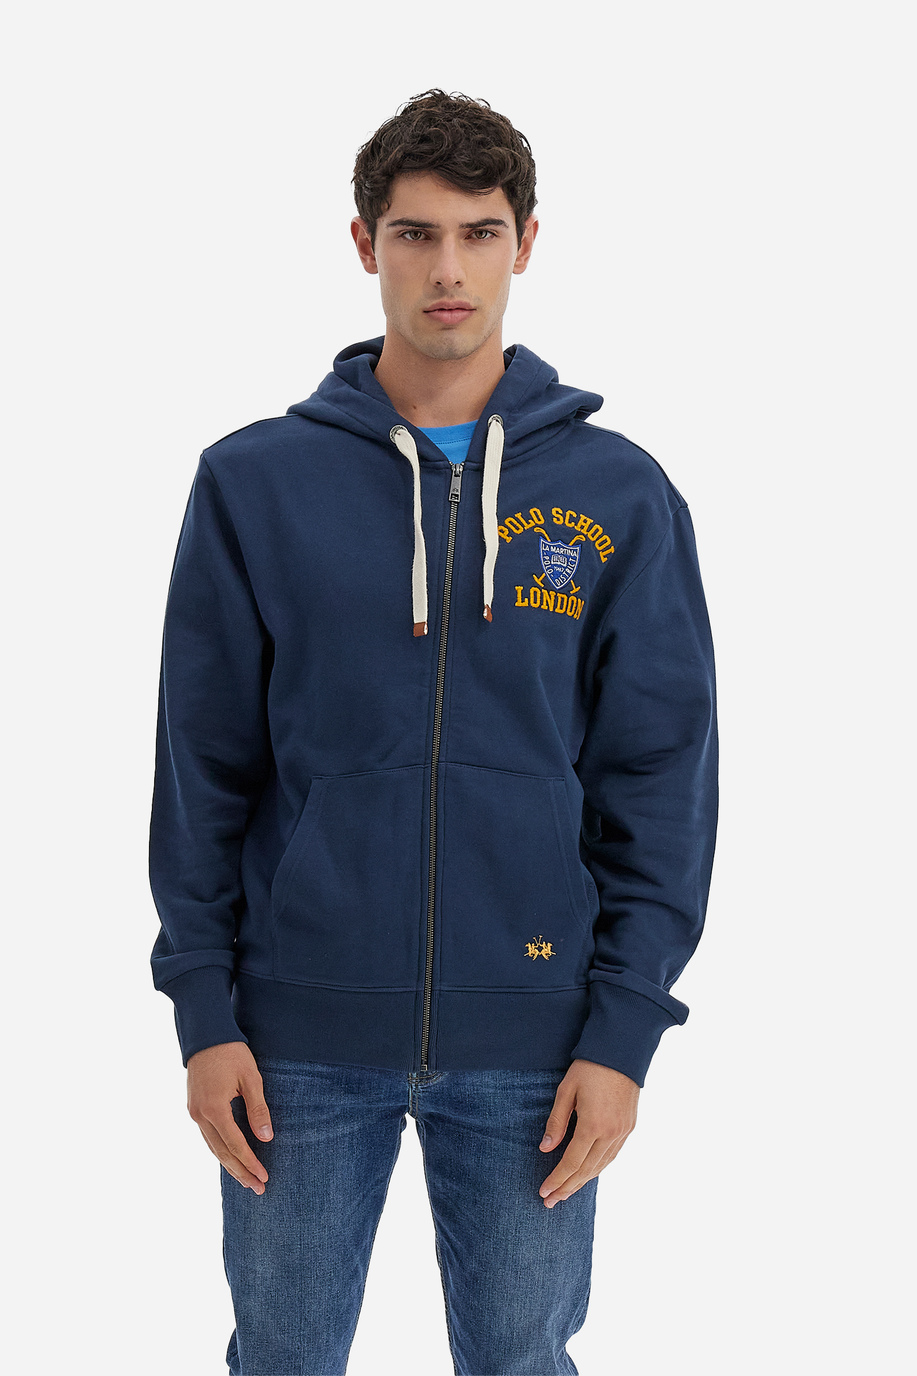 Polo Academy men's full zip hooded sweatshirt in solid color with small logo - Valoris - Sweatshirts | La Martina - Official Online Shop